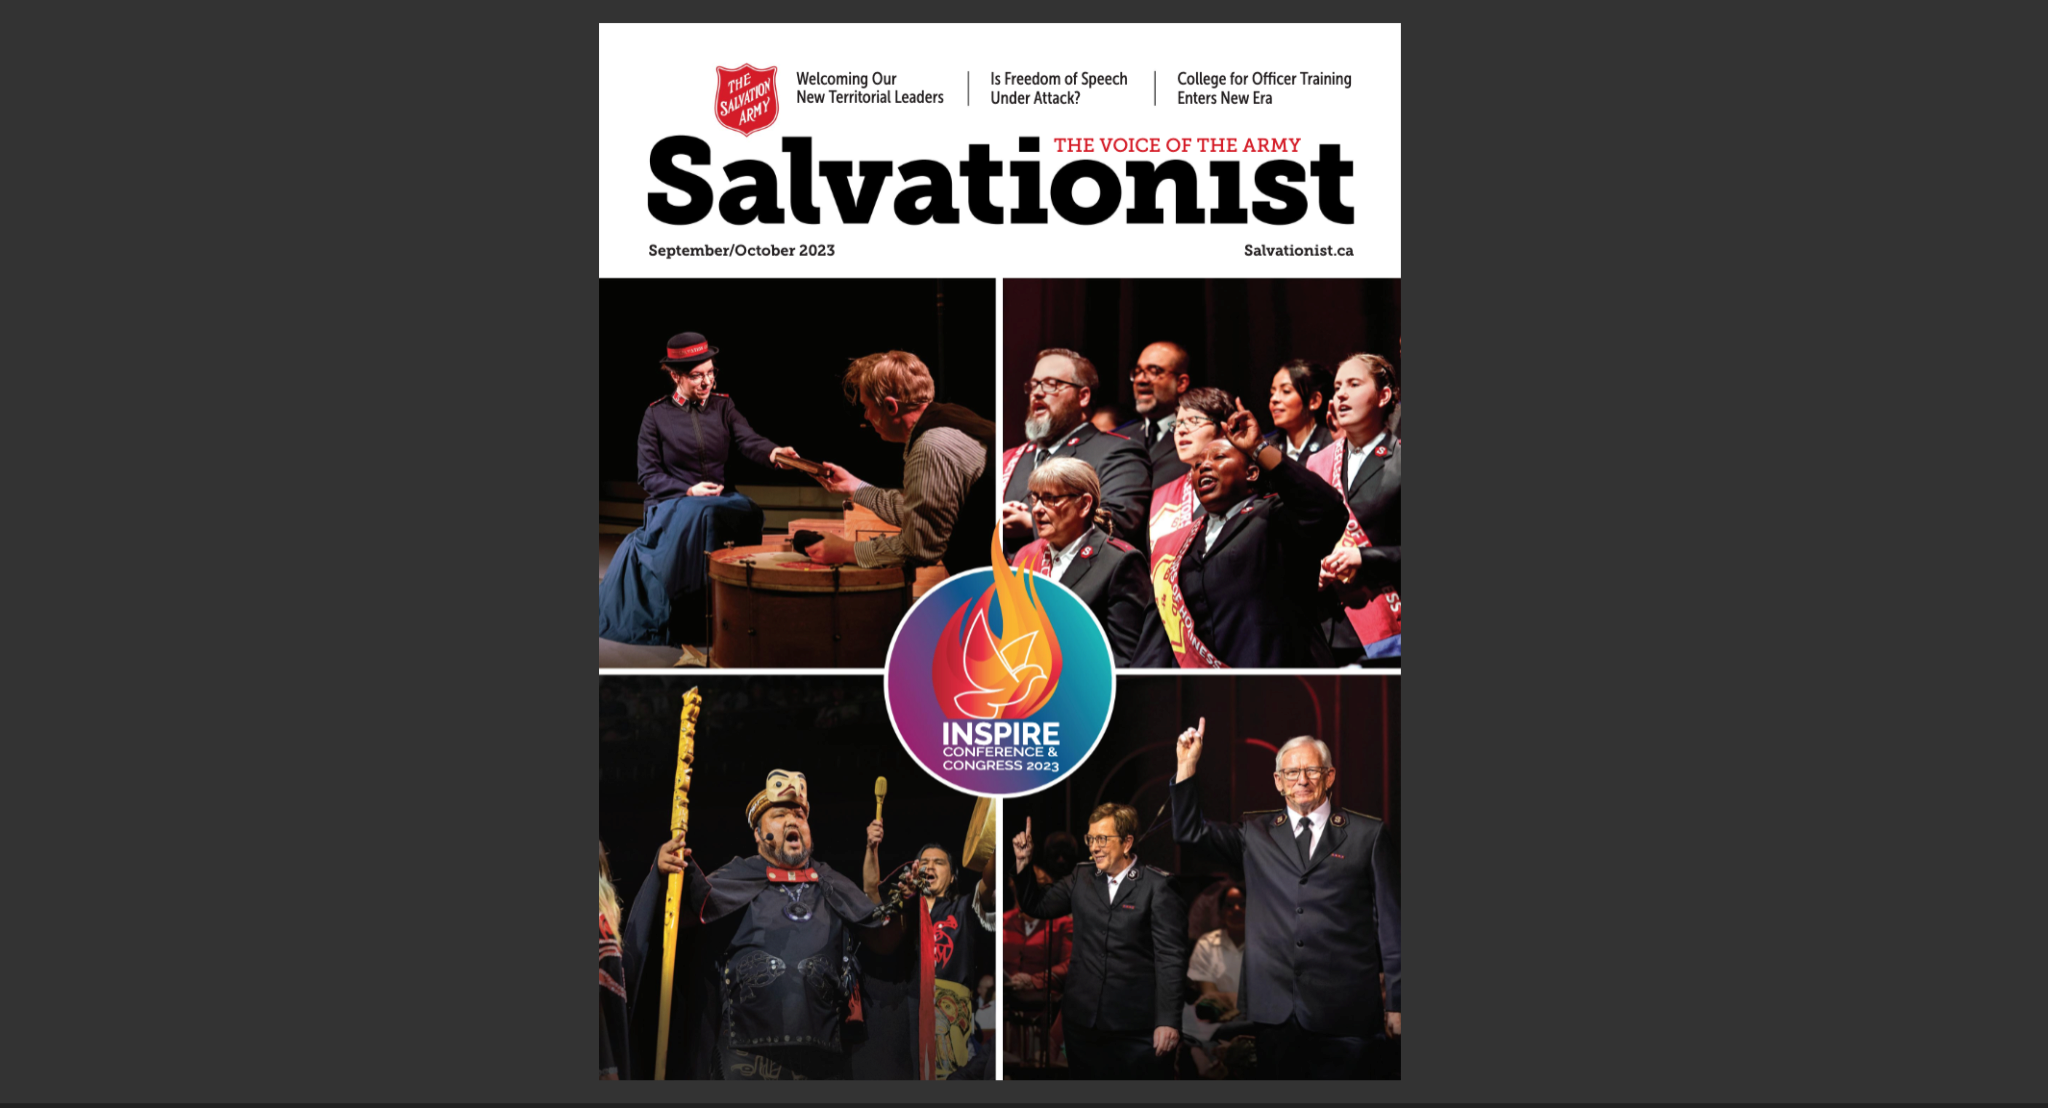 INSPIRE Issue of Salvationist